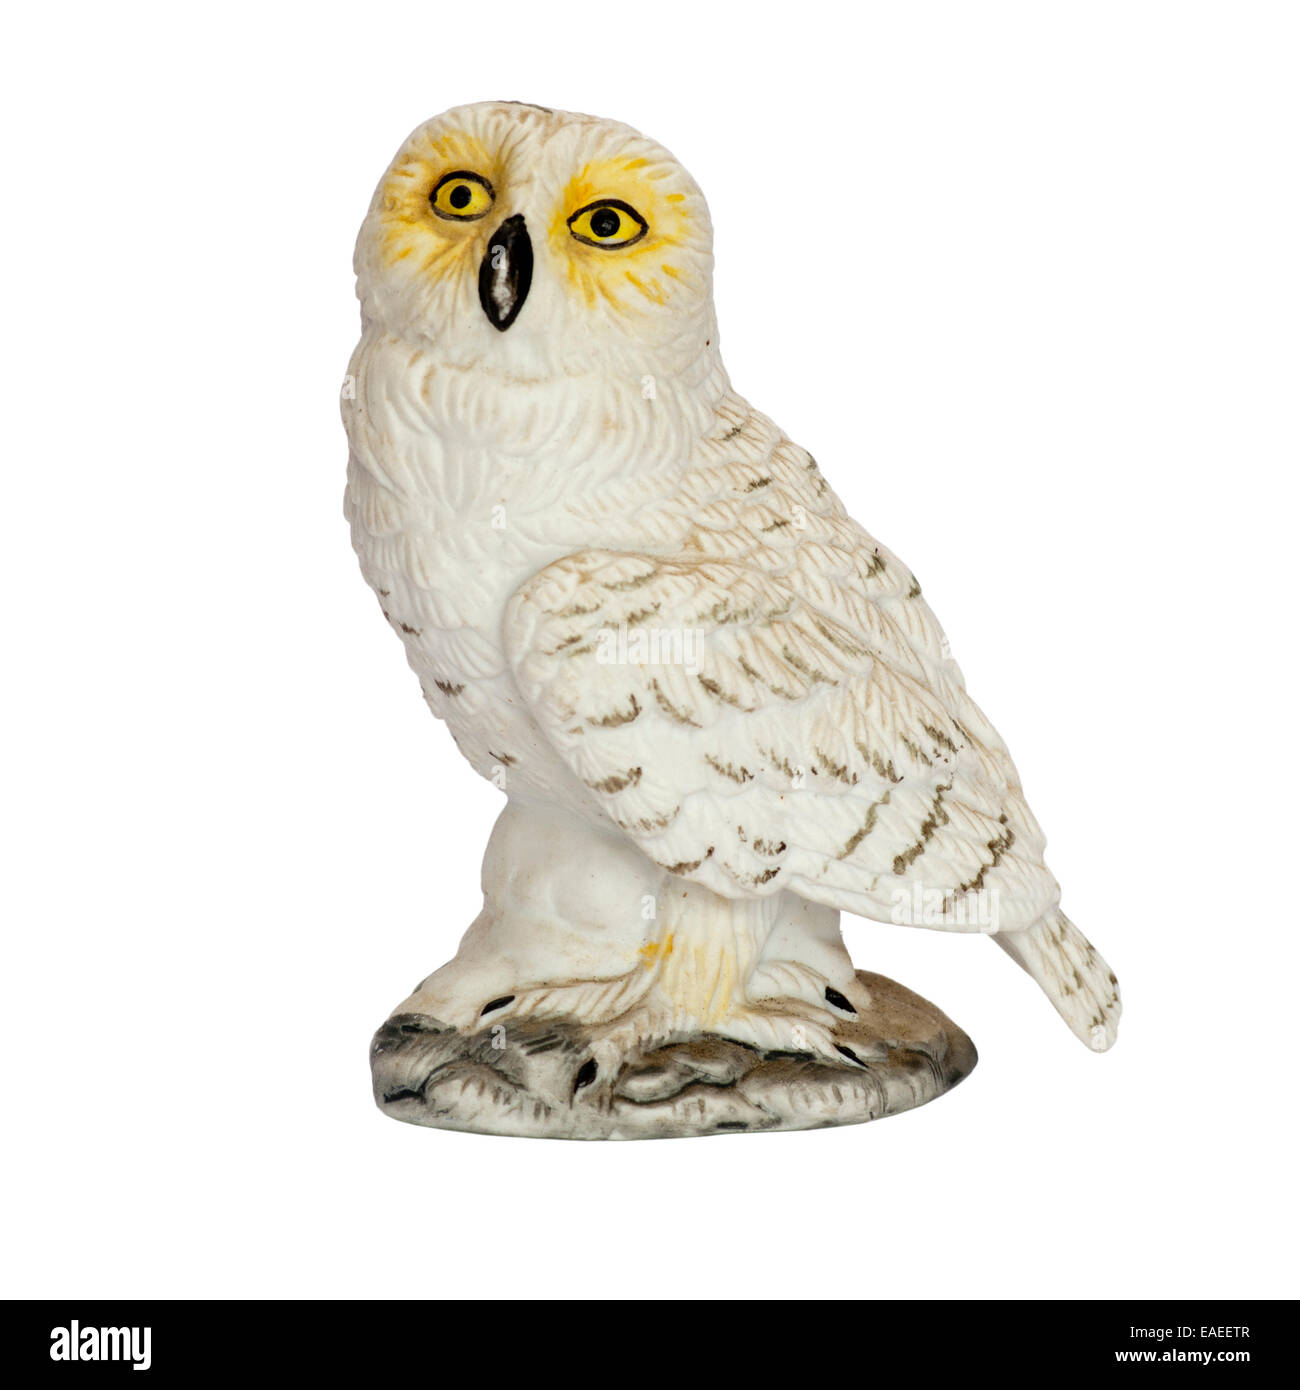 Snowy Owl Ornament Stock Photo